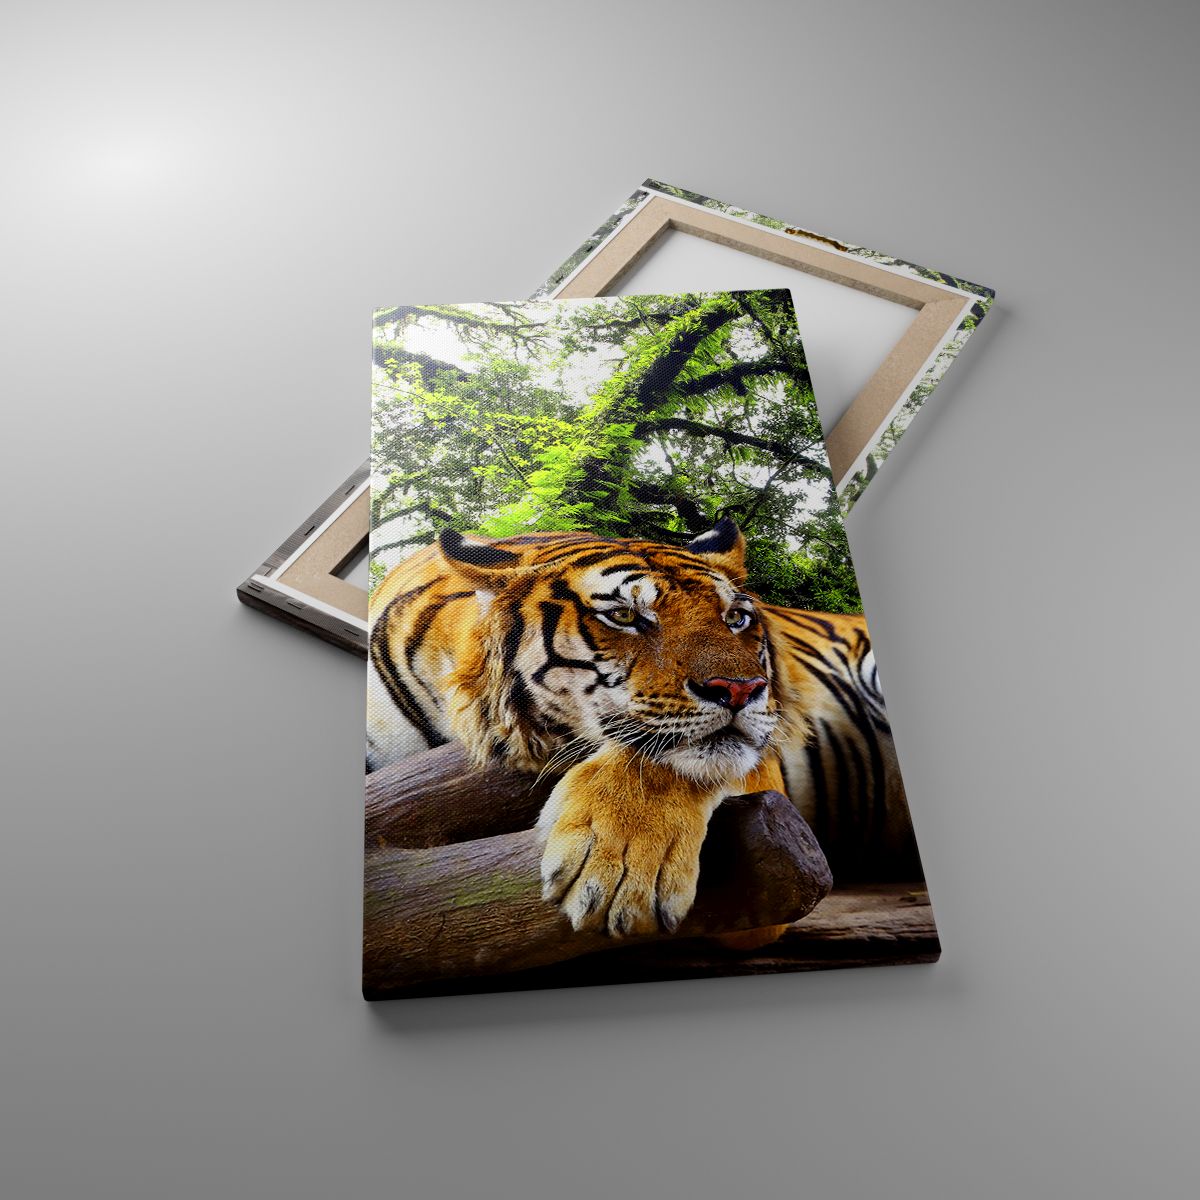 Obrazy Tygrys, Obrazy Zwierzęta, Obrazy Drapieżnik, Obrazy Natura, Obrazy Dżungla